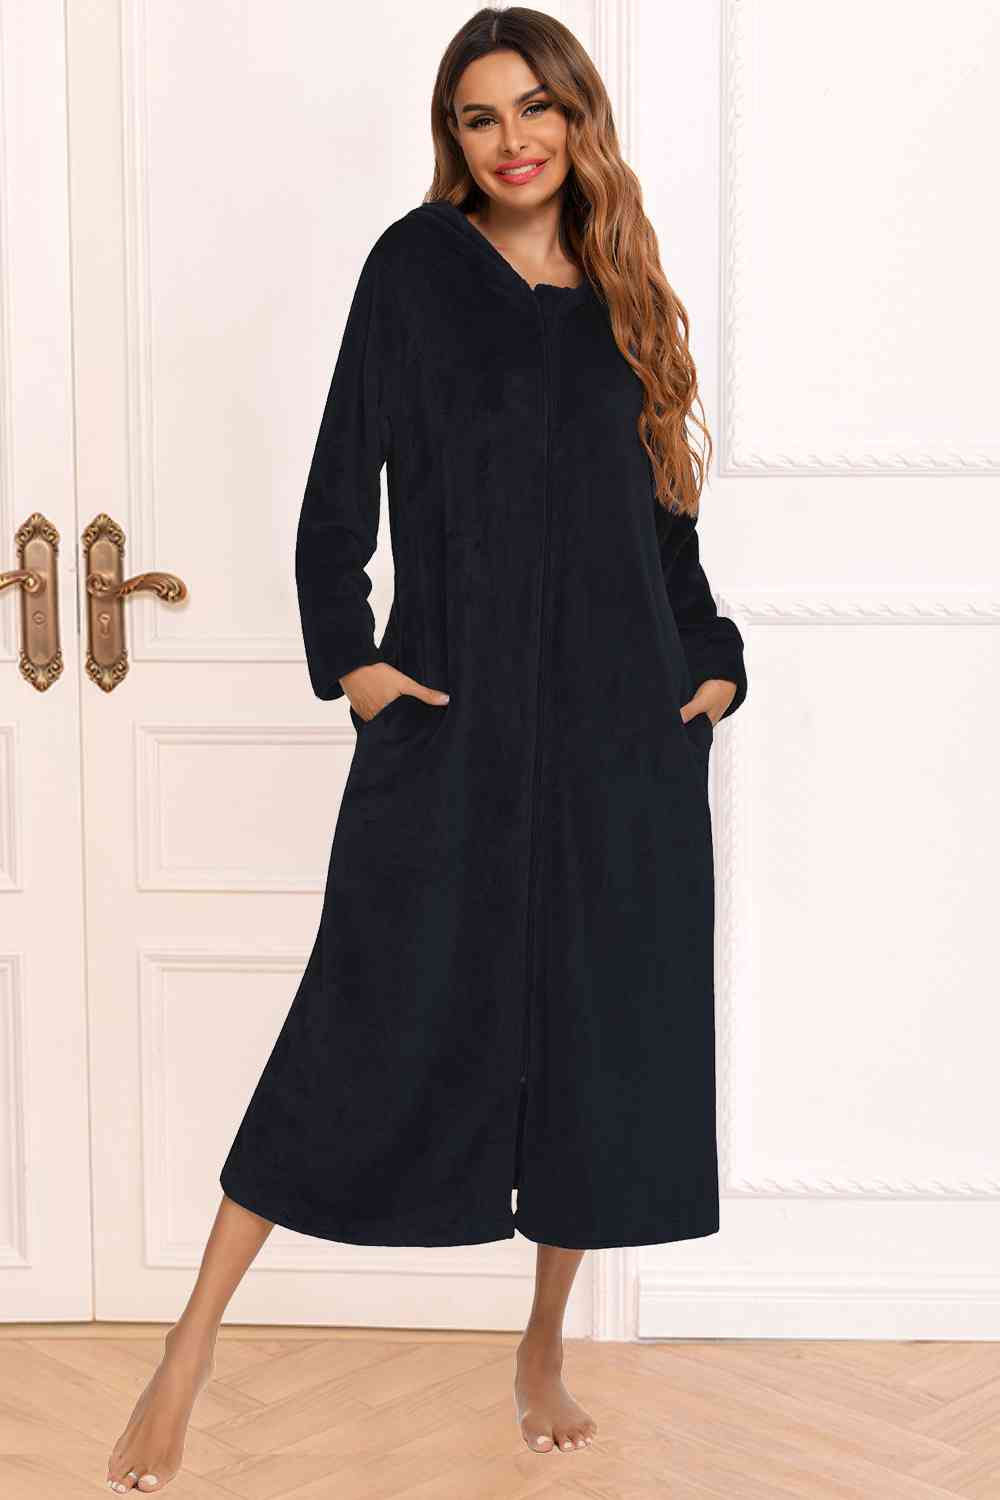 Premium soft cotton nightwear dress 499+ shipping PaW ✨ Half